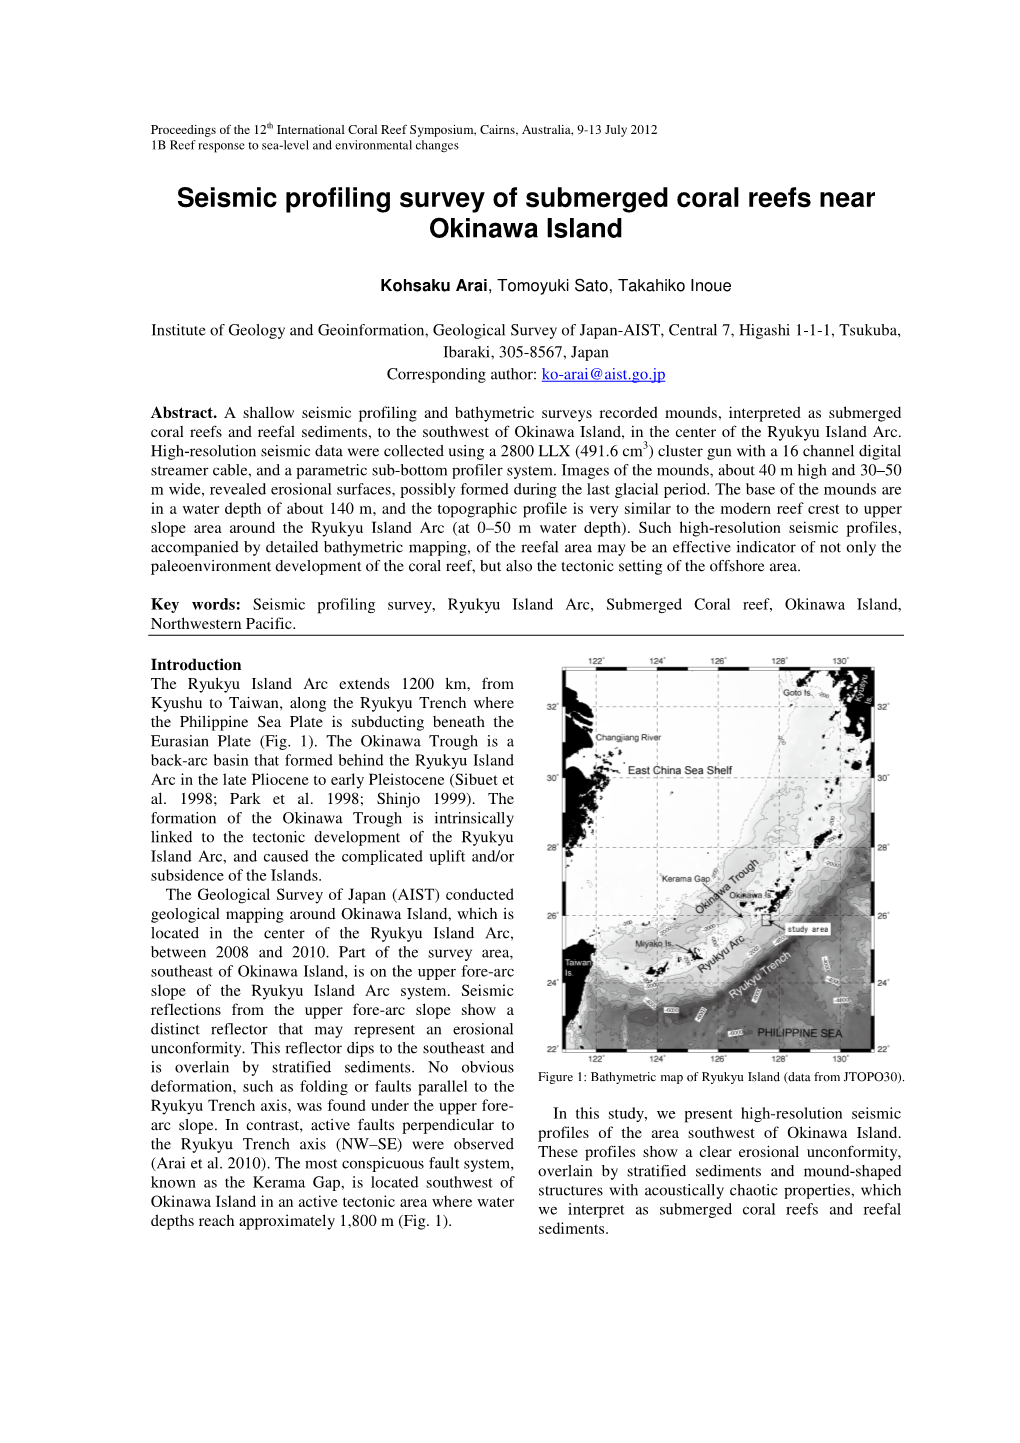 Seismic Profiling Survey of Submerged Coral Reefs Near Okinawa Island